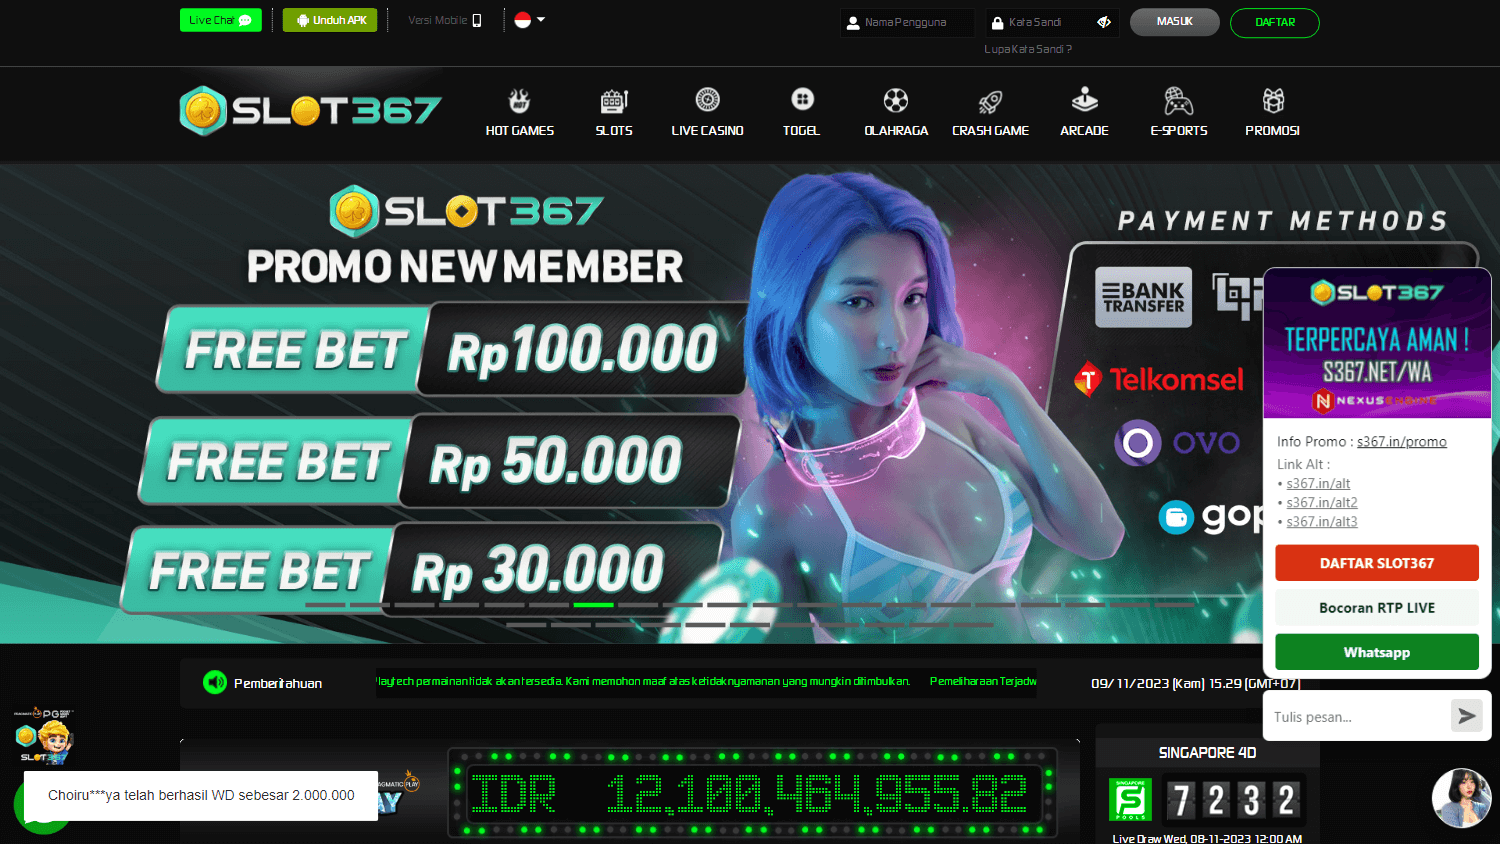 slot367_casino_homepage_desktop